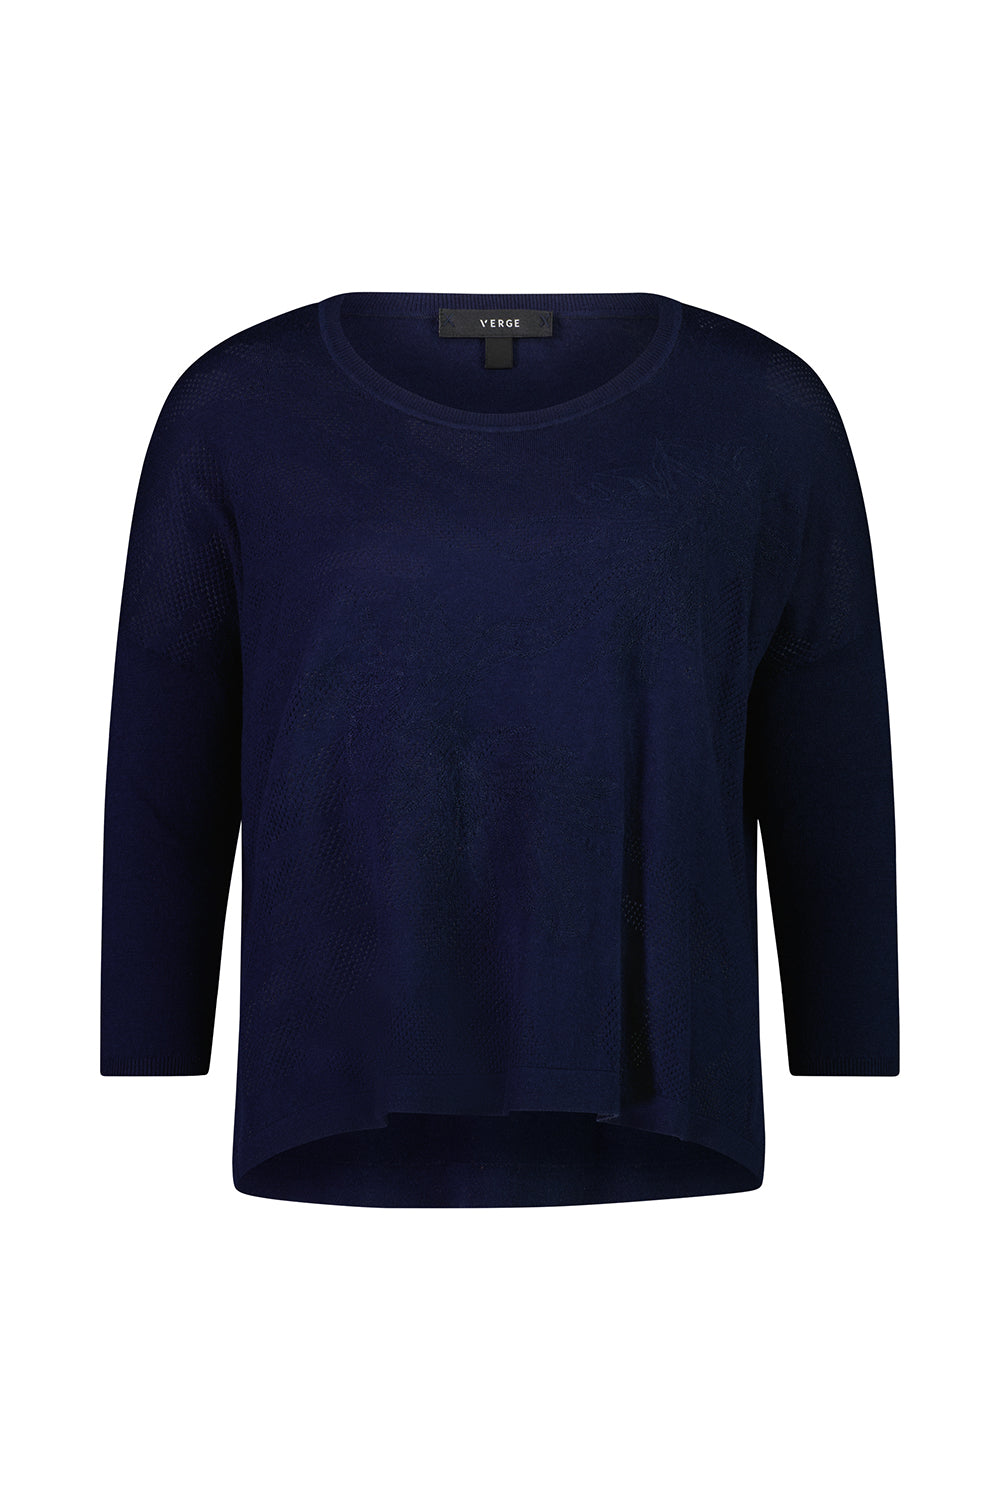 Lust Sweater - Ink - Sweater VERGE